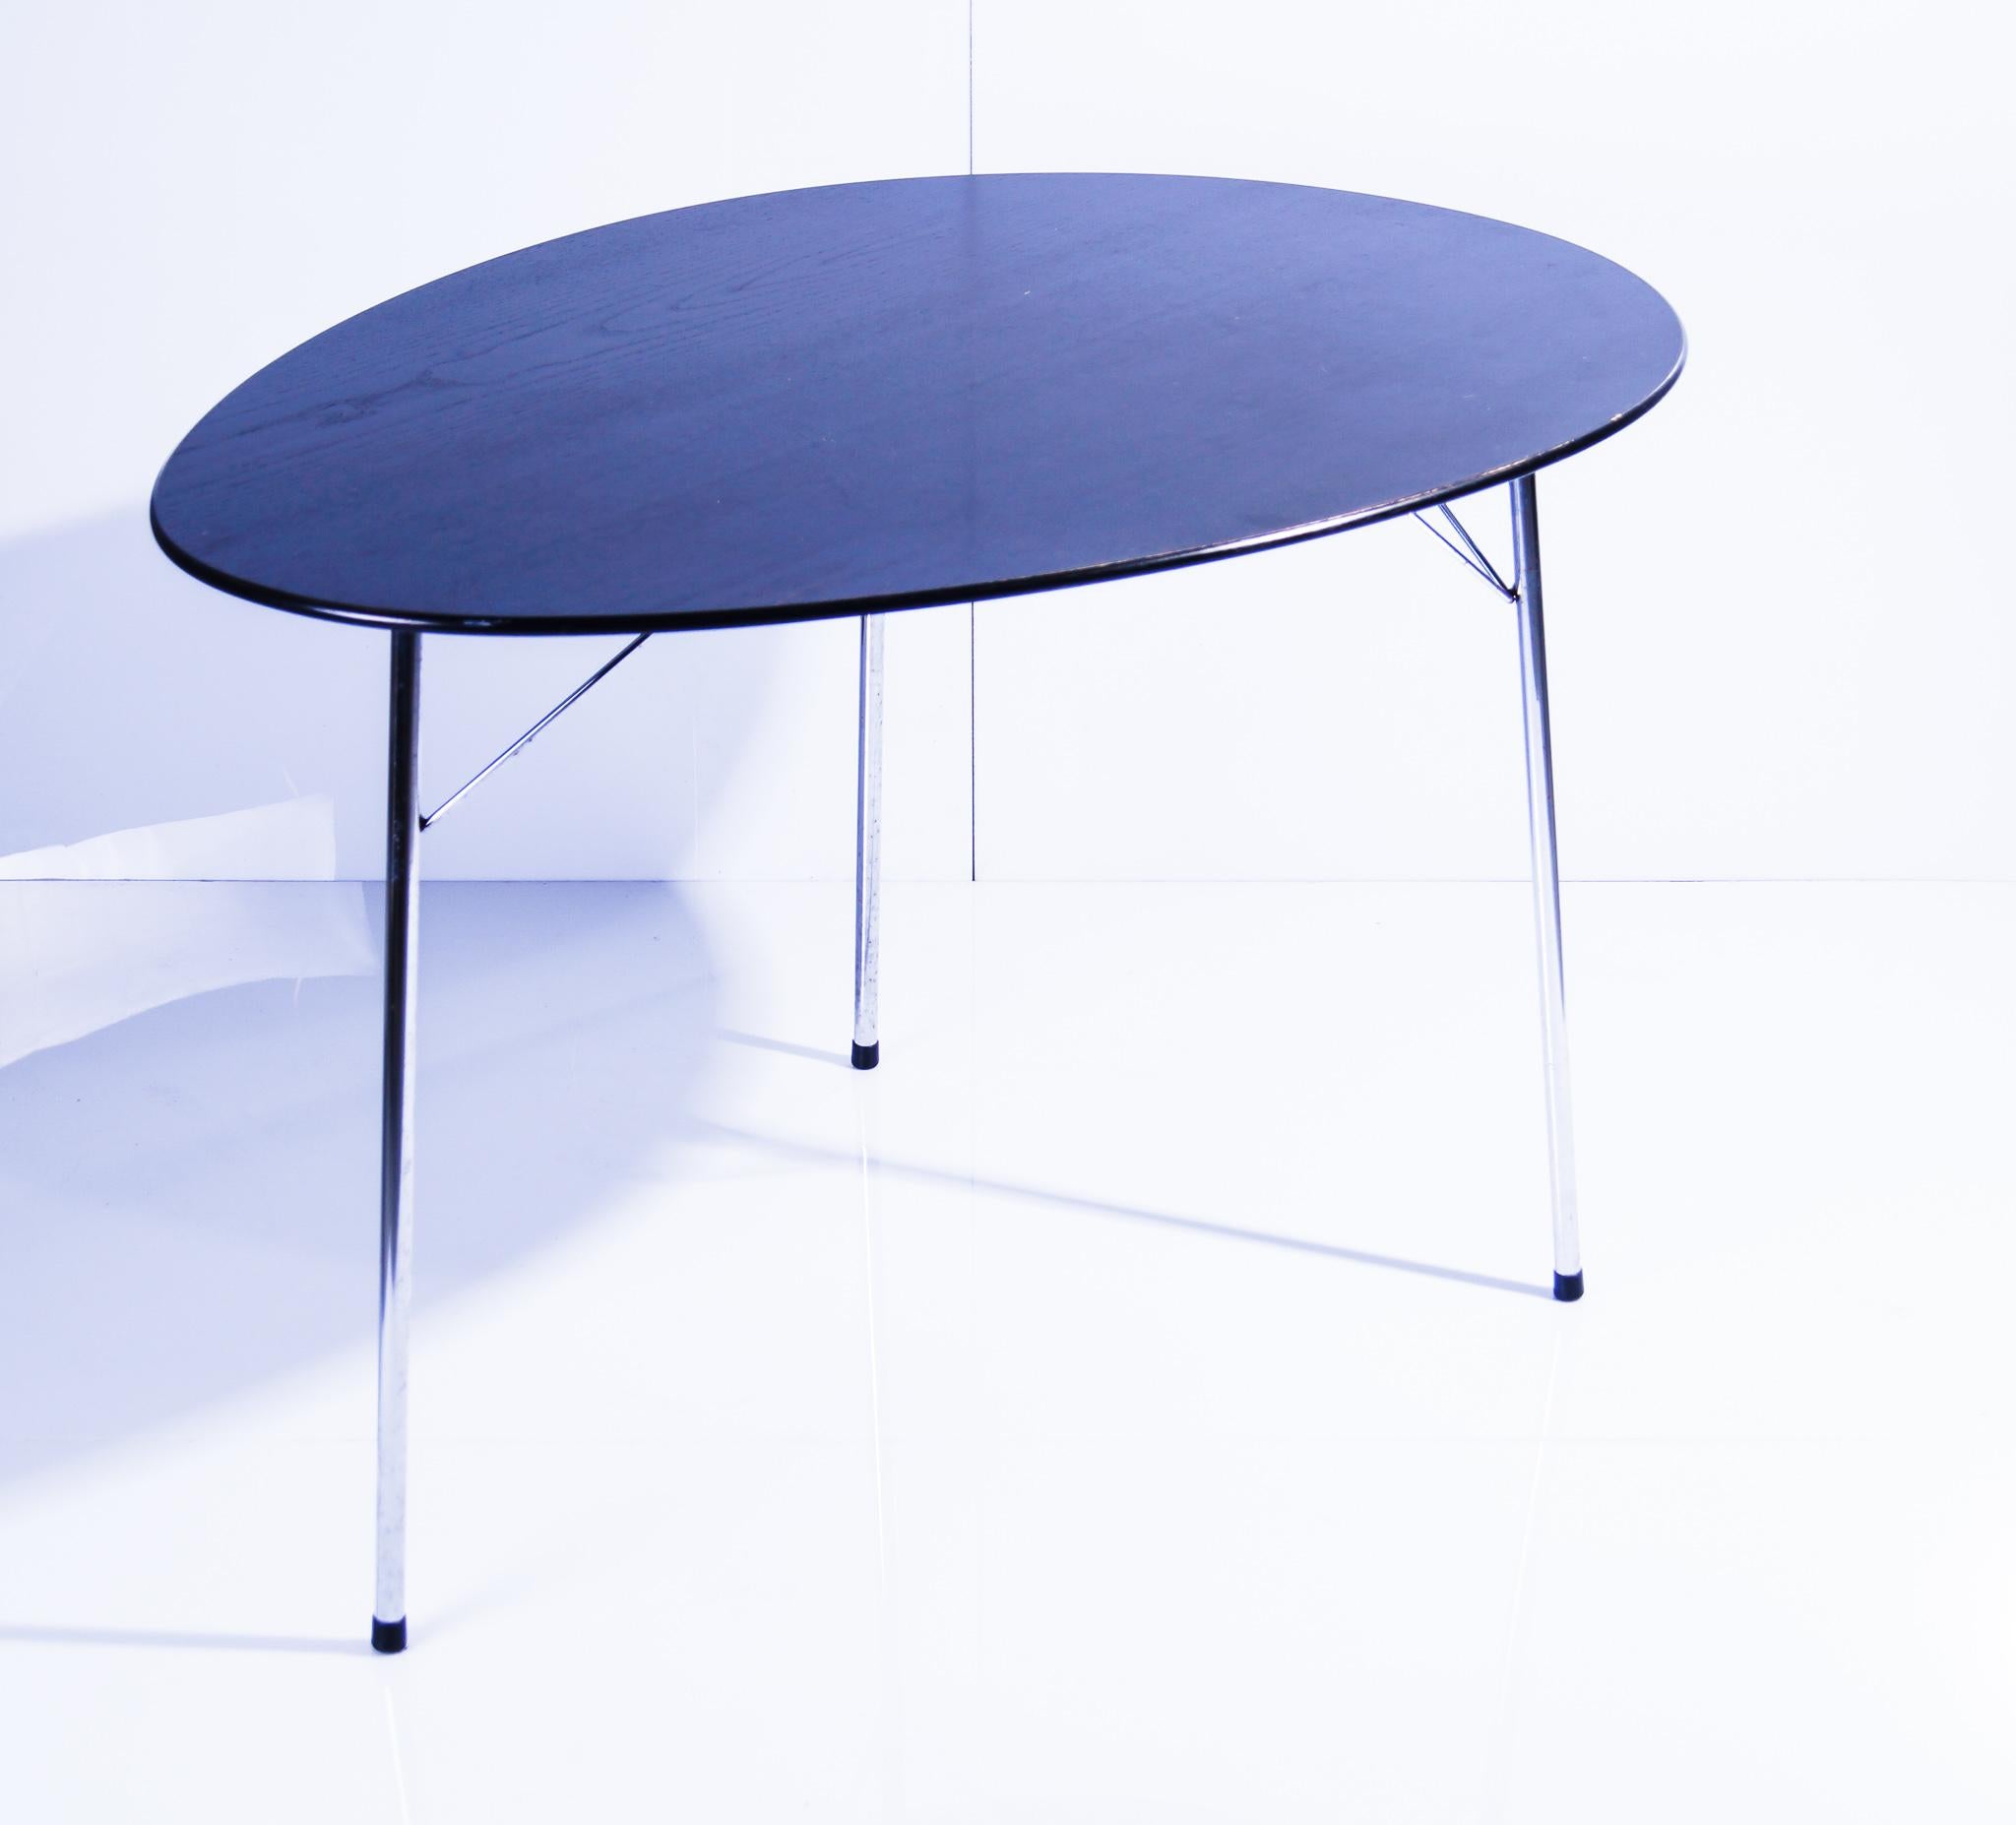 Arne Jacobsen, Oval Tapered-Shaped Table, Model 3603 3